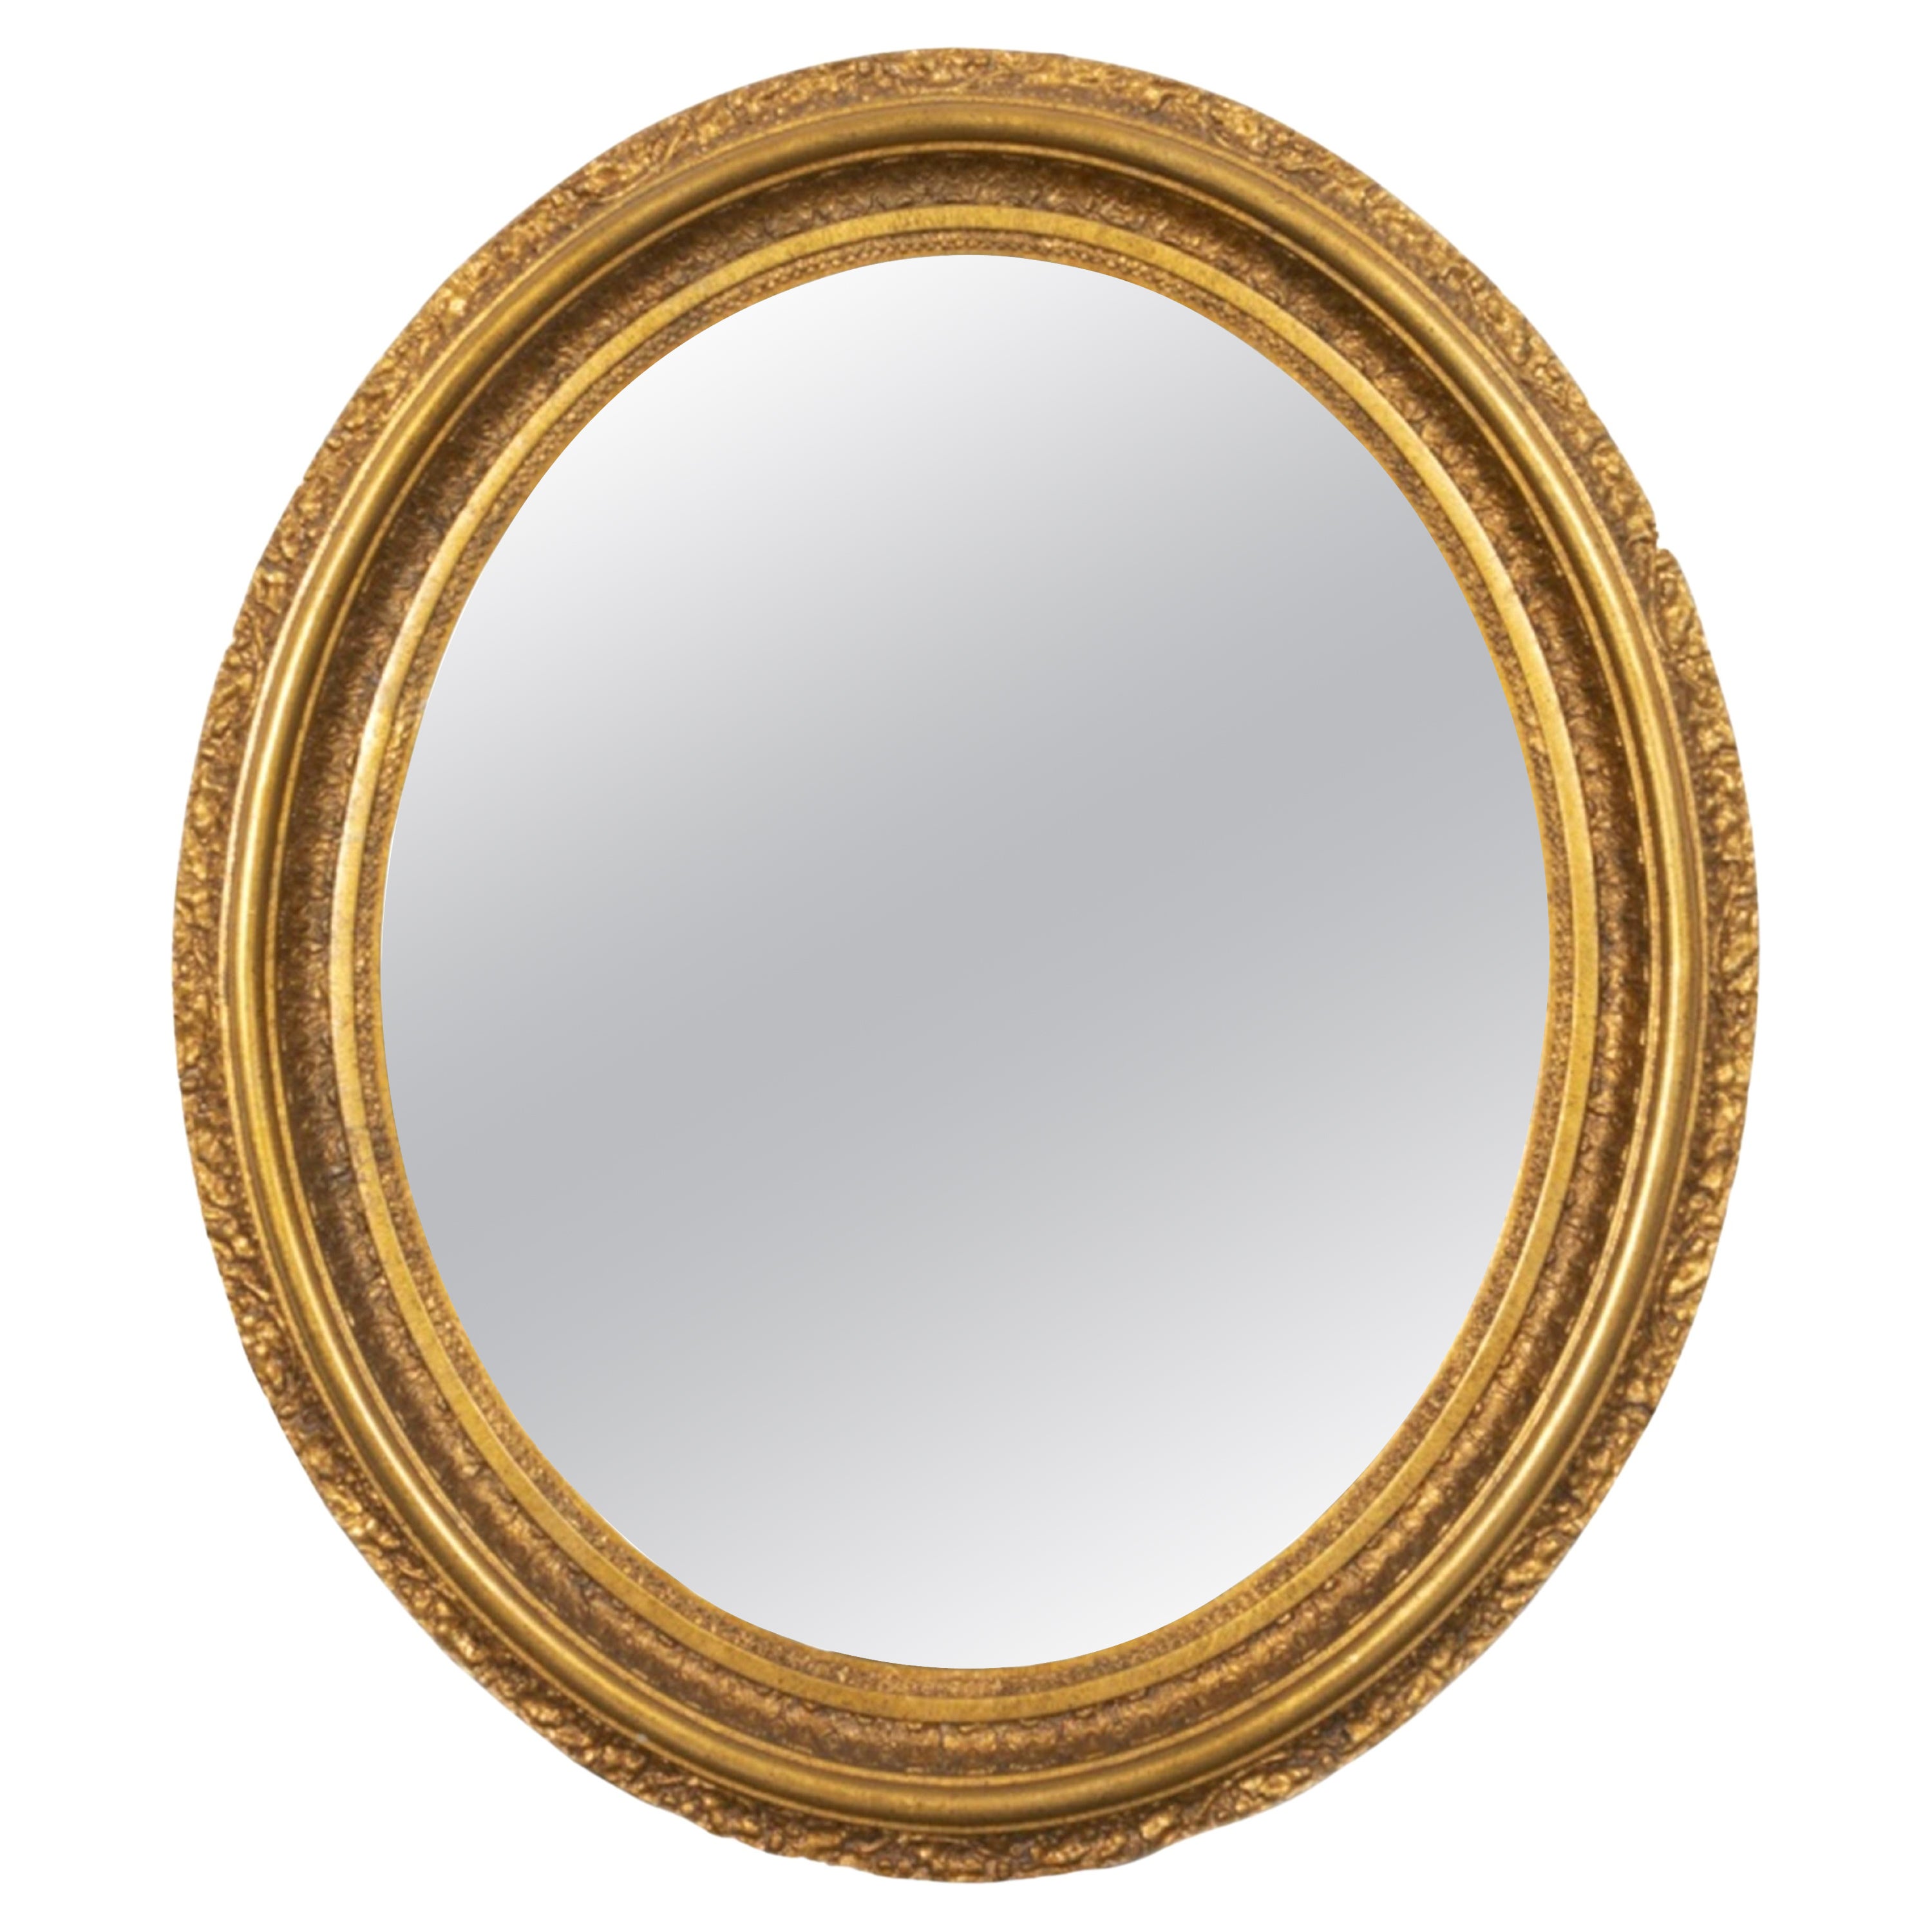 Miroir ovale en bois doré de style néo-rococo en vente